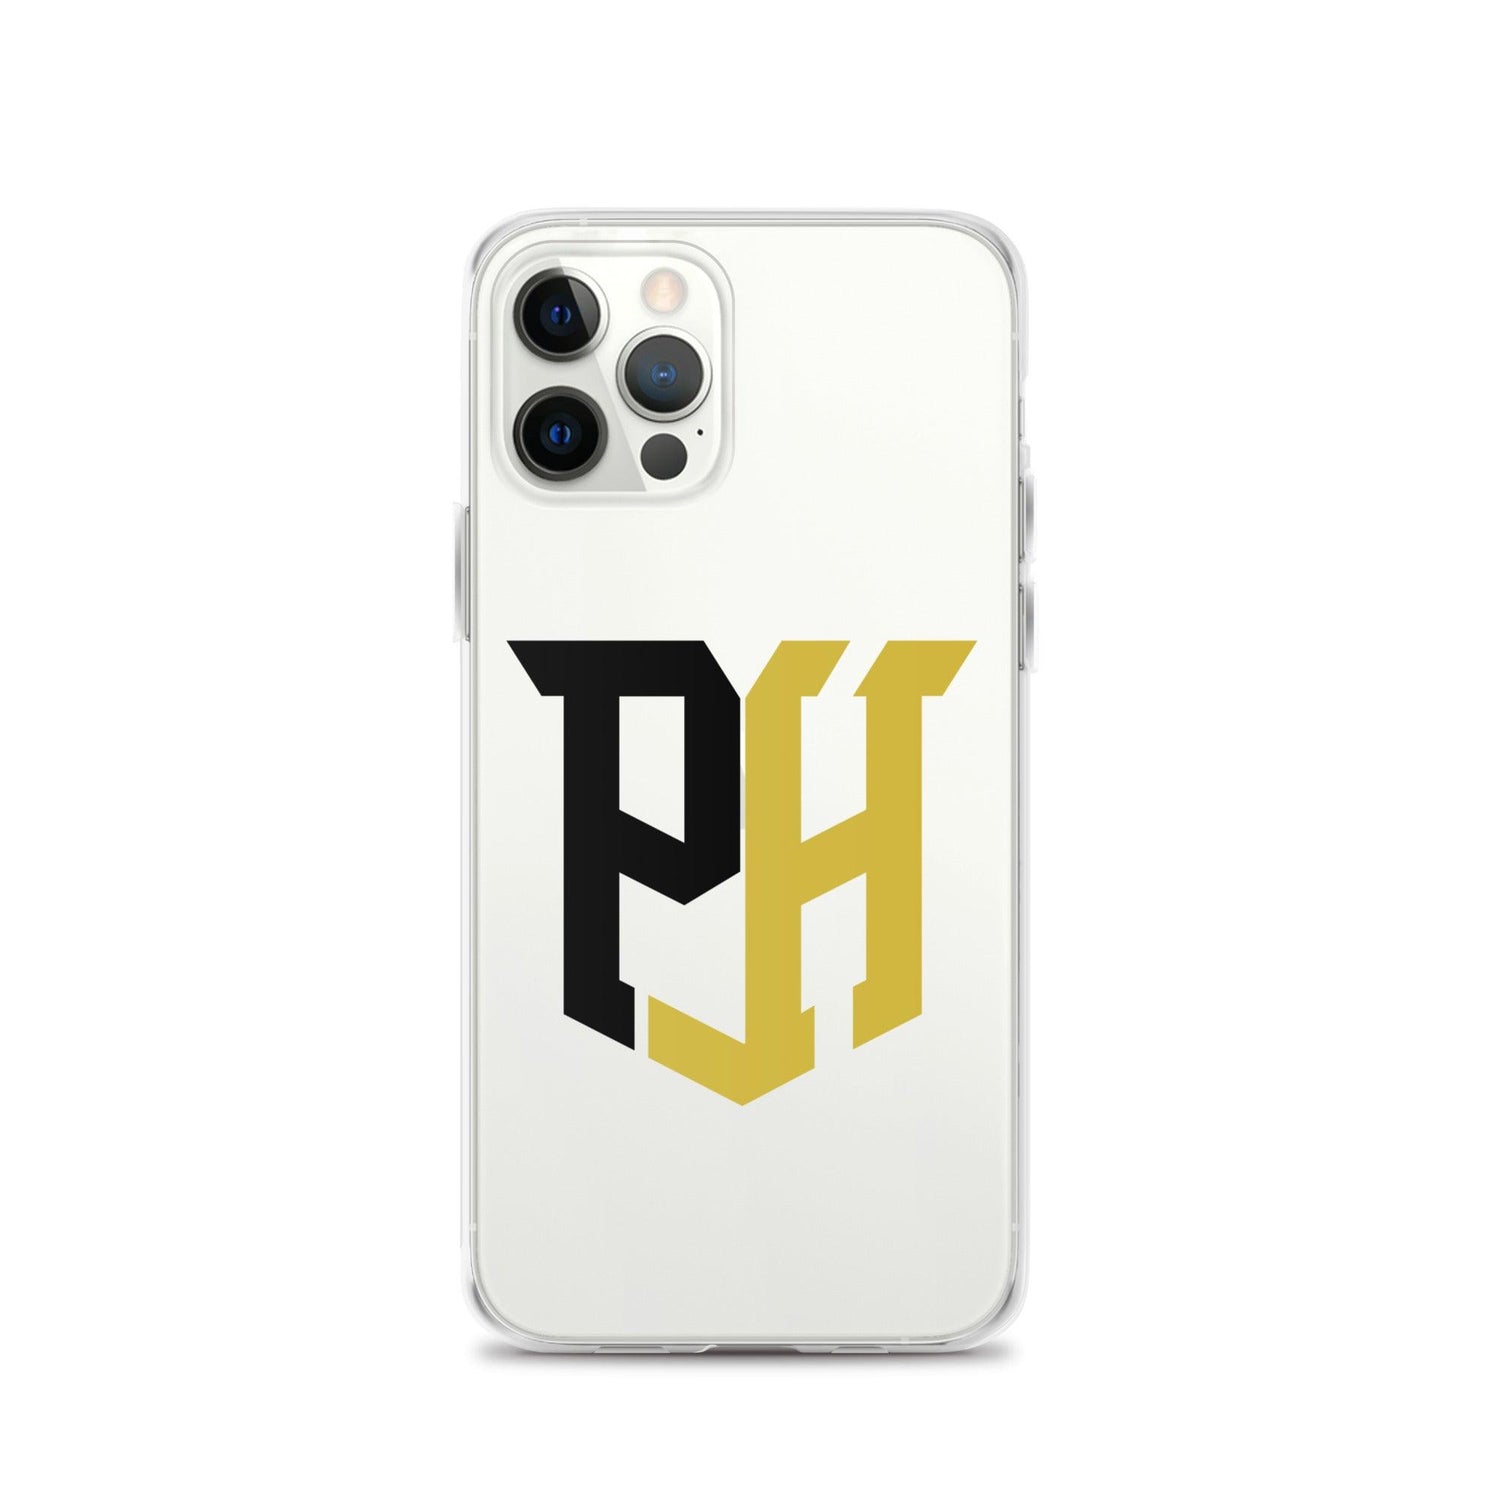 Prentiss Hubb “PH” iPhone Case - Fan Arch